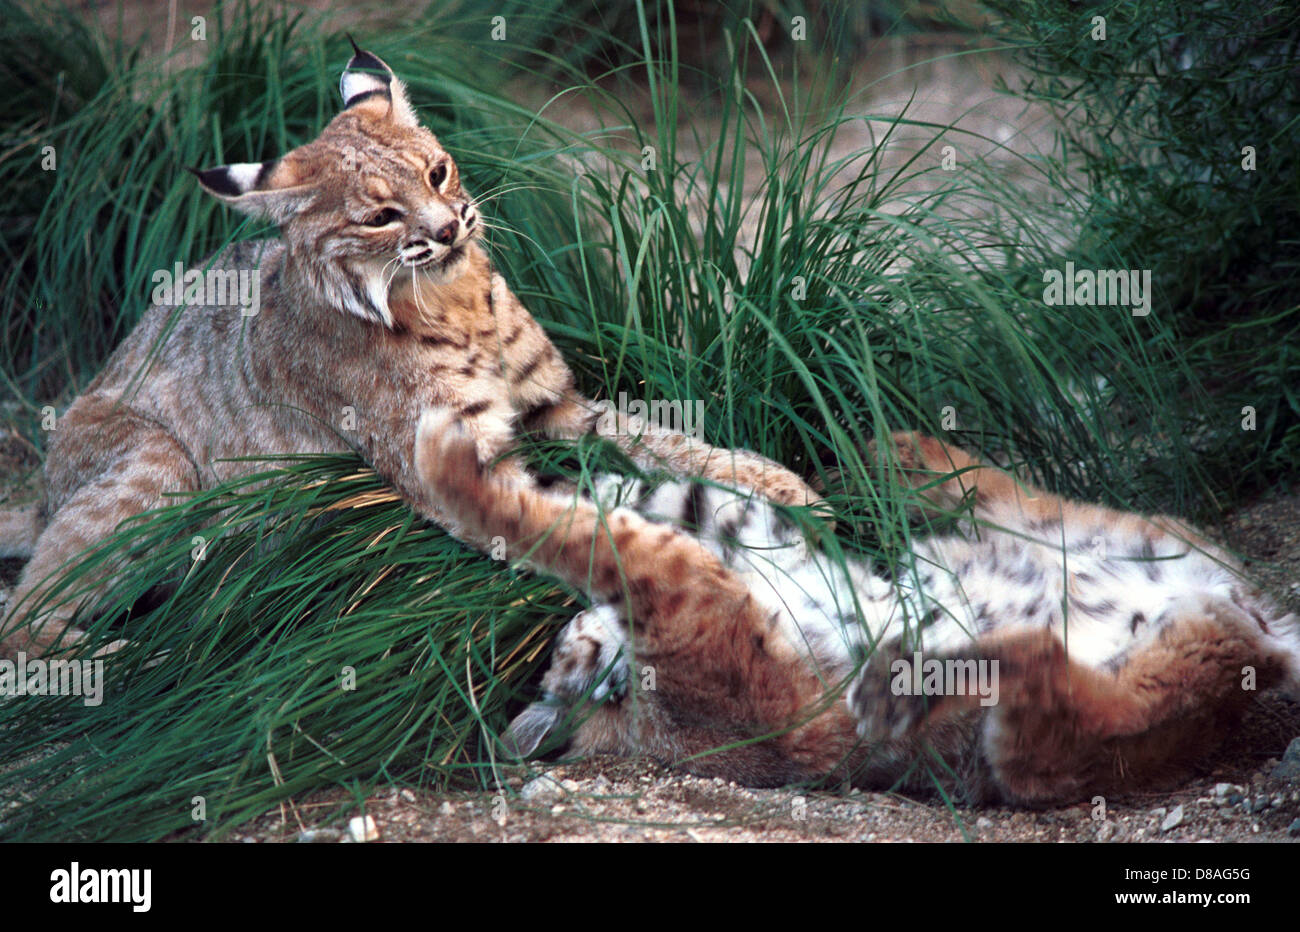 Bobcat, Lynx predator medium sized wildcat with black tipped stubby tail and black tufted ears,Wildcat mammal predator, Stock Photo